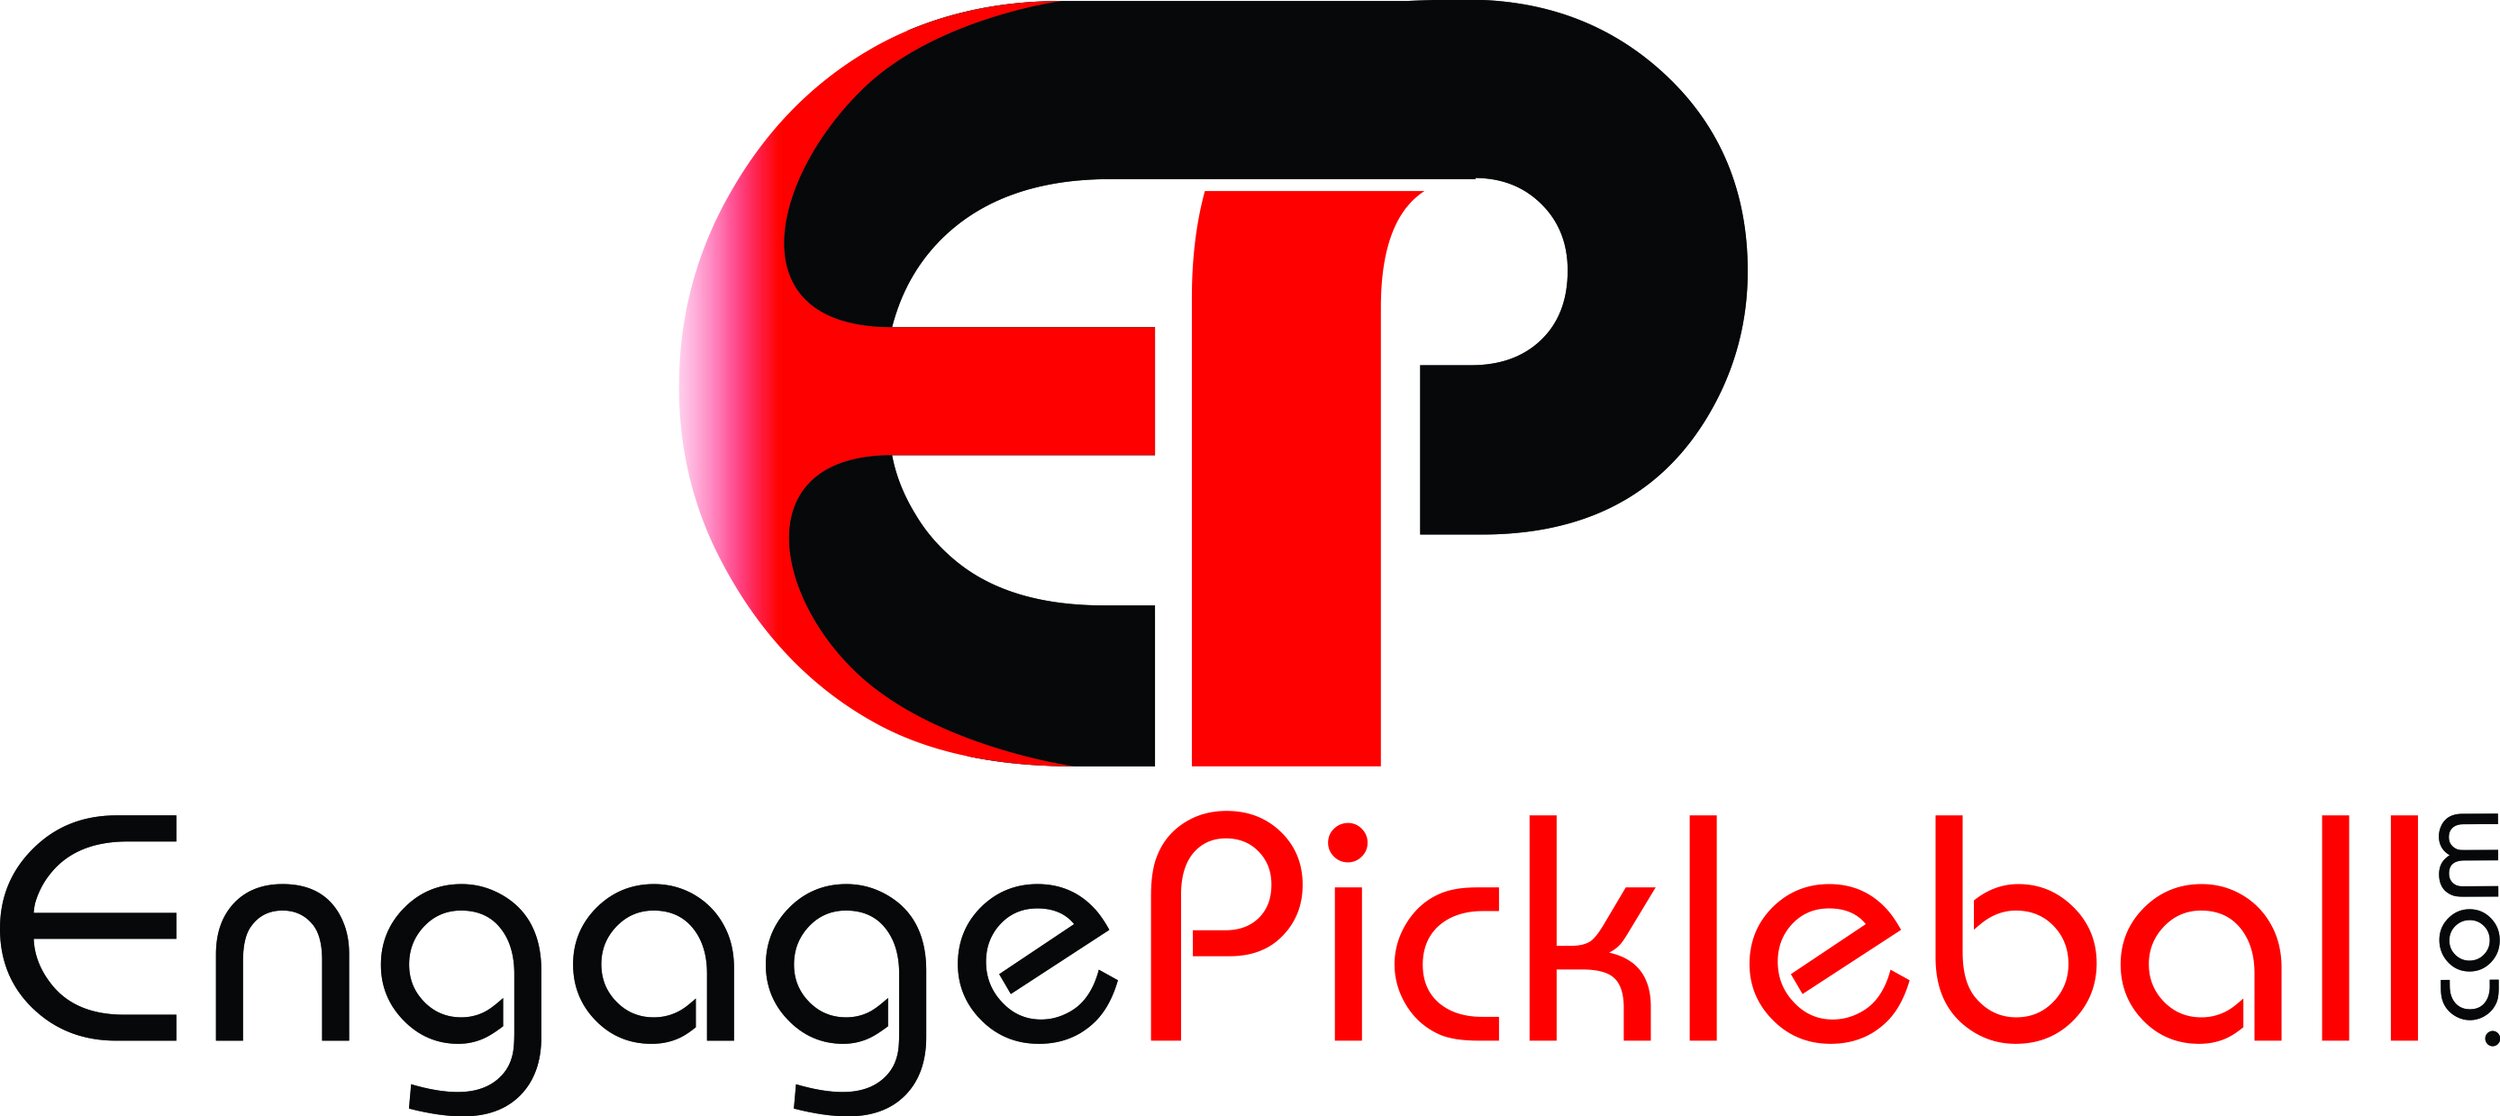 20151009 Engage Pickleball Logo (002).jpg